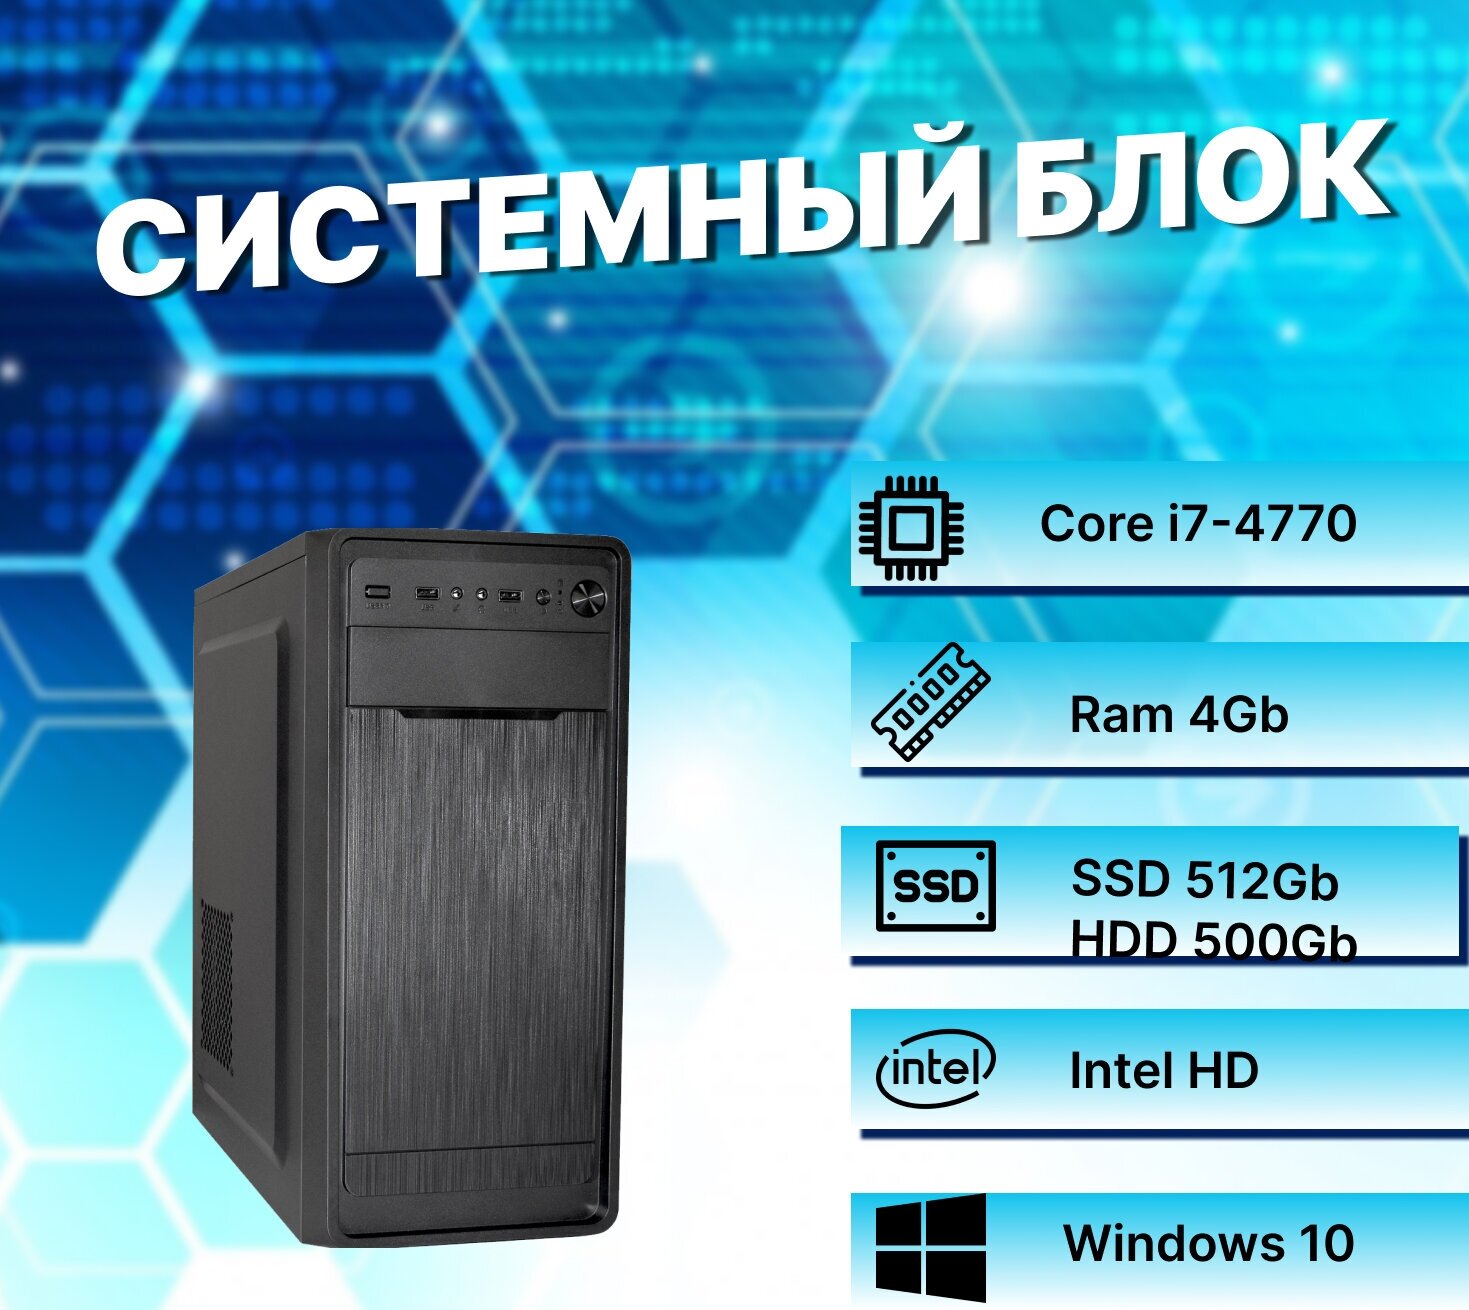 Системный блок Intel Core i7-4770 (3.4ГГц)/ RAM 4Gb/ SSD 512Gb/ HDD 500Gb/ Intel HD/ Windows 10 Pro